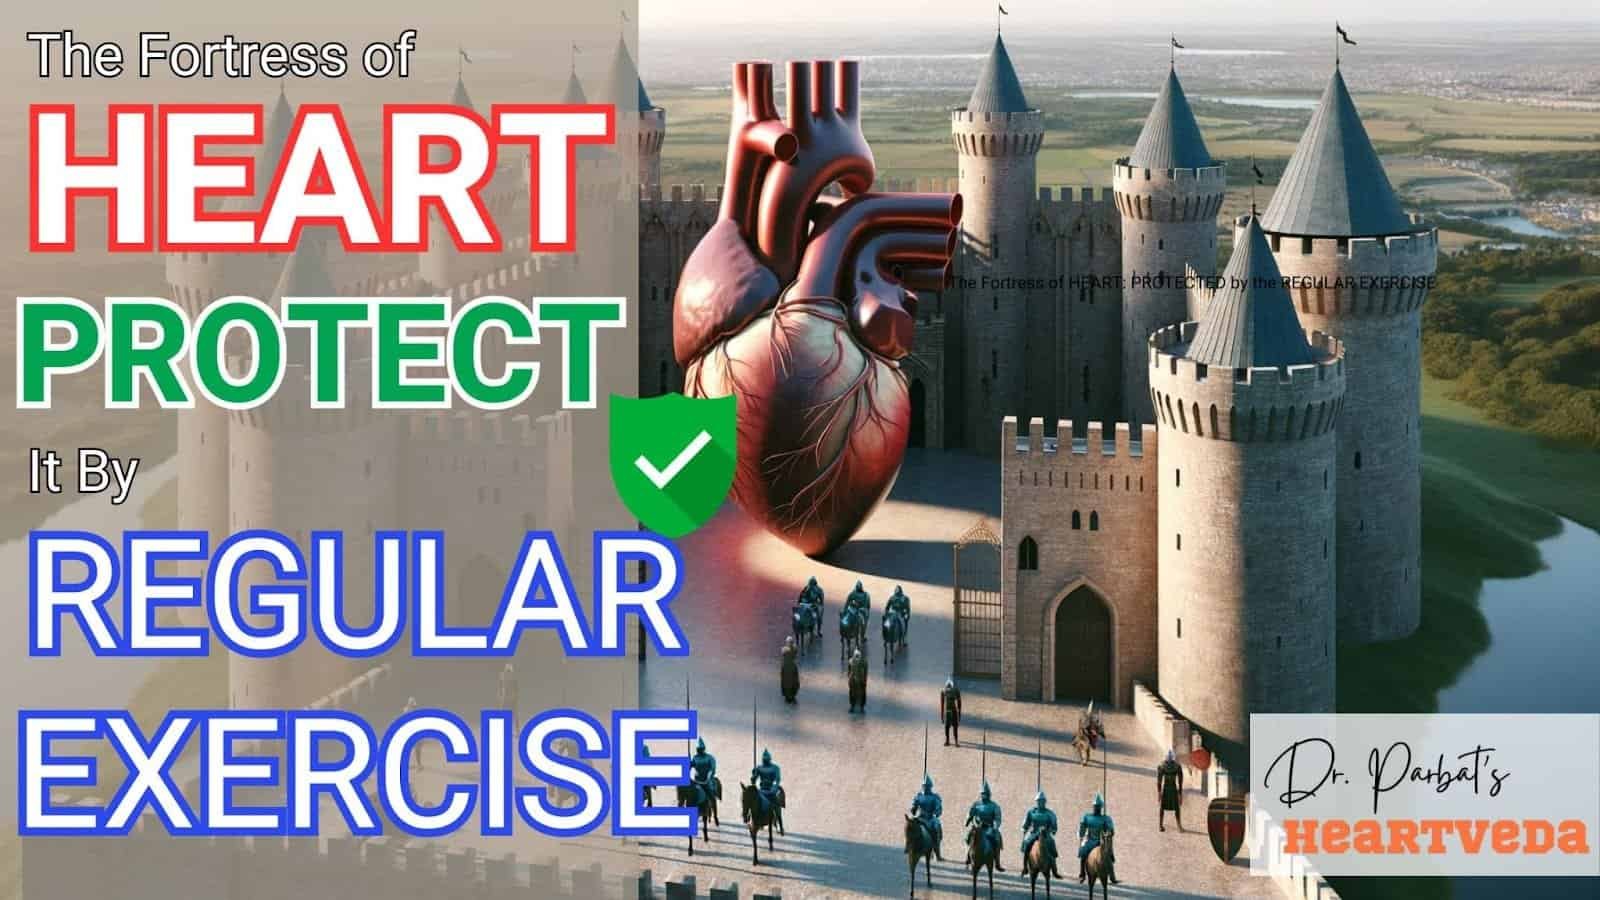 Blog Banner: Heart can be Protected by Regular Exercise - Dr. Biprajit Parbat - HEARTVEDA